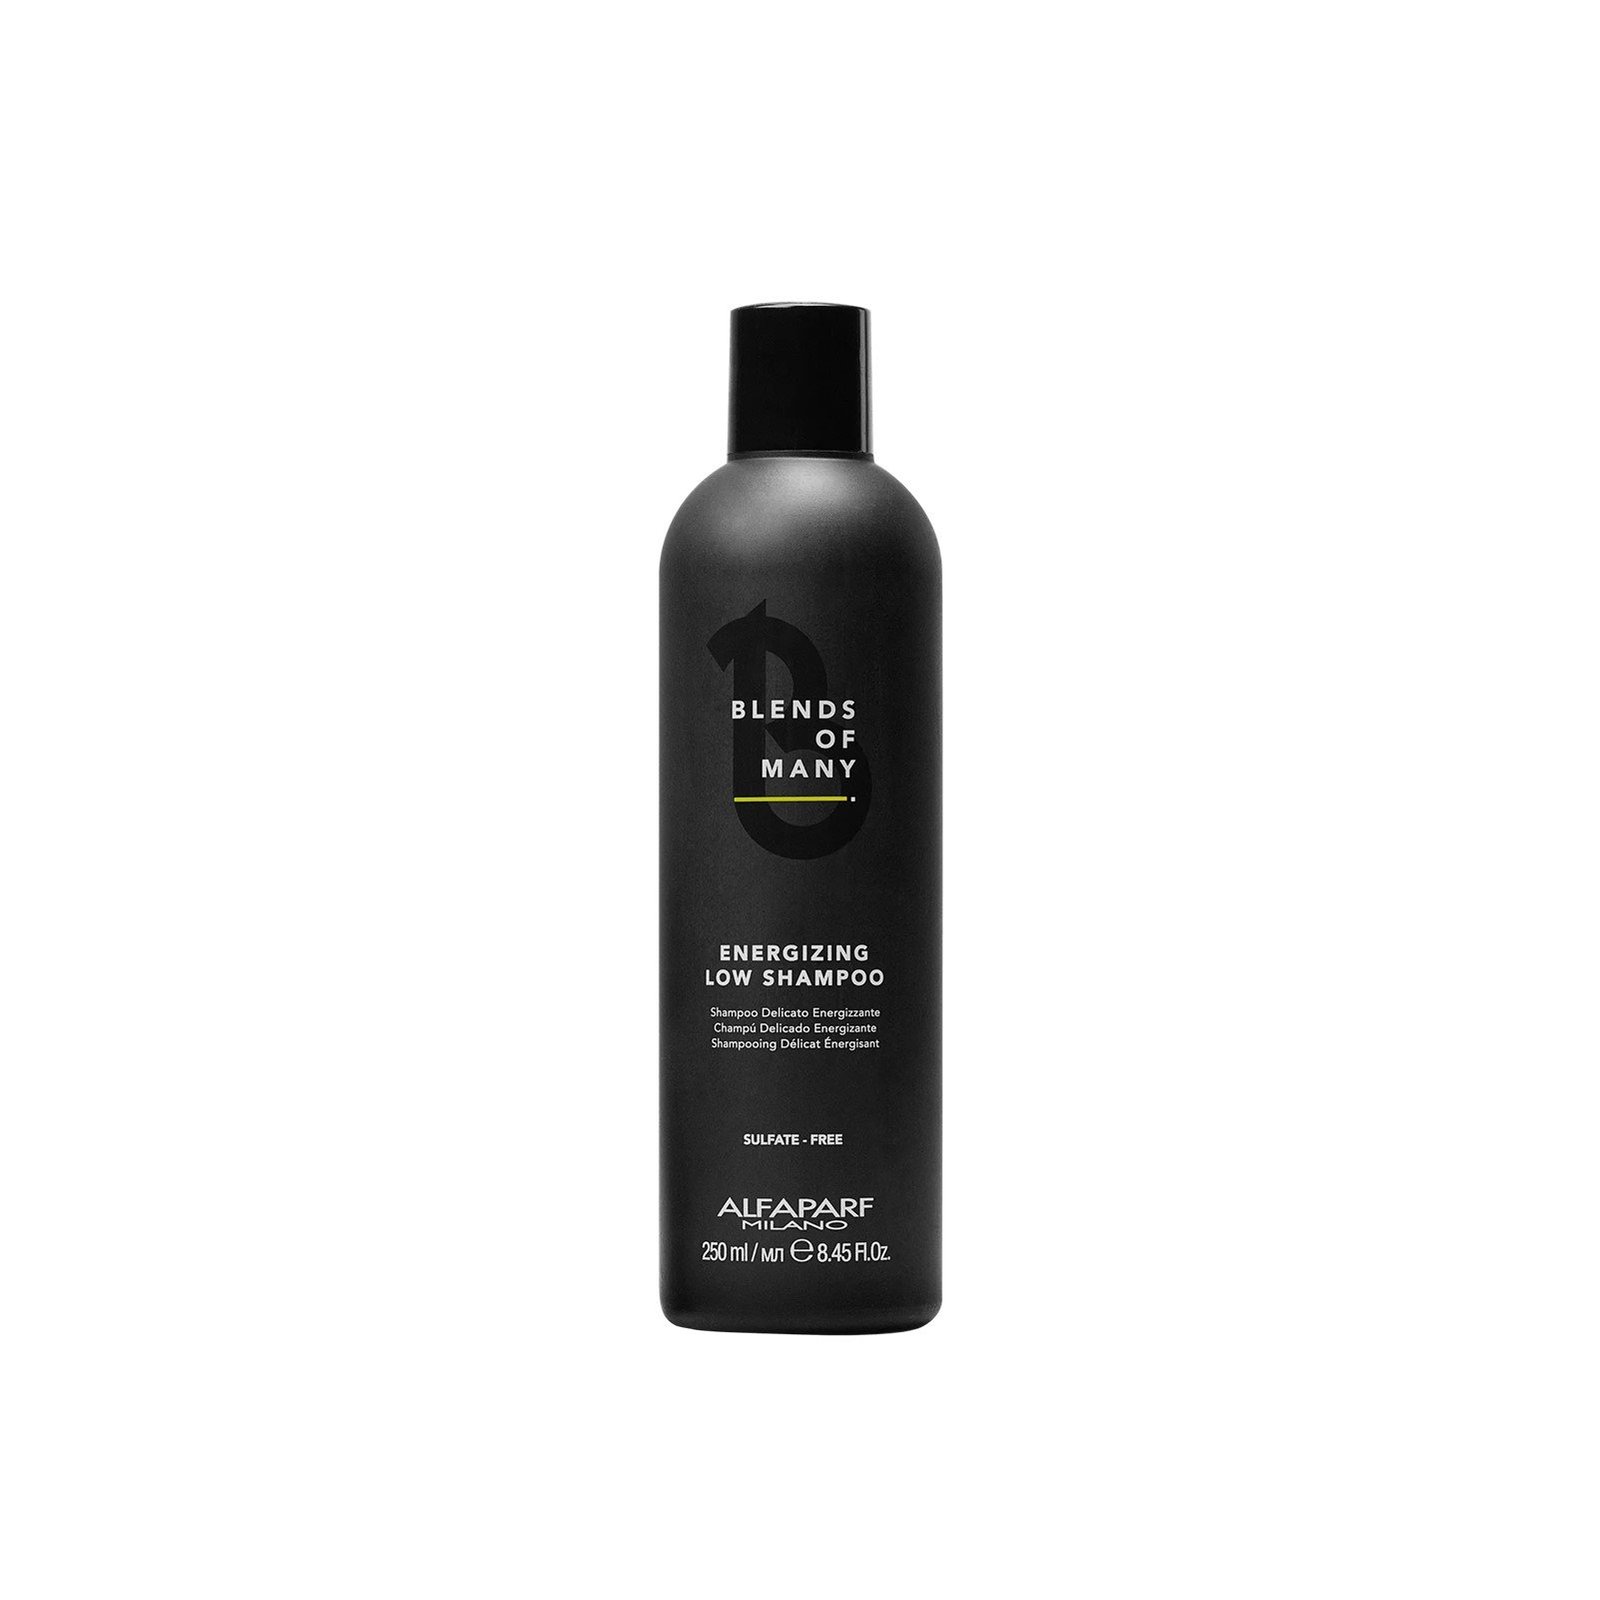 Alfaparf Milano Professional Blends Of Many Energizing Low Shampoo 250ml (8.45floz)